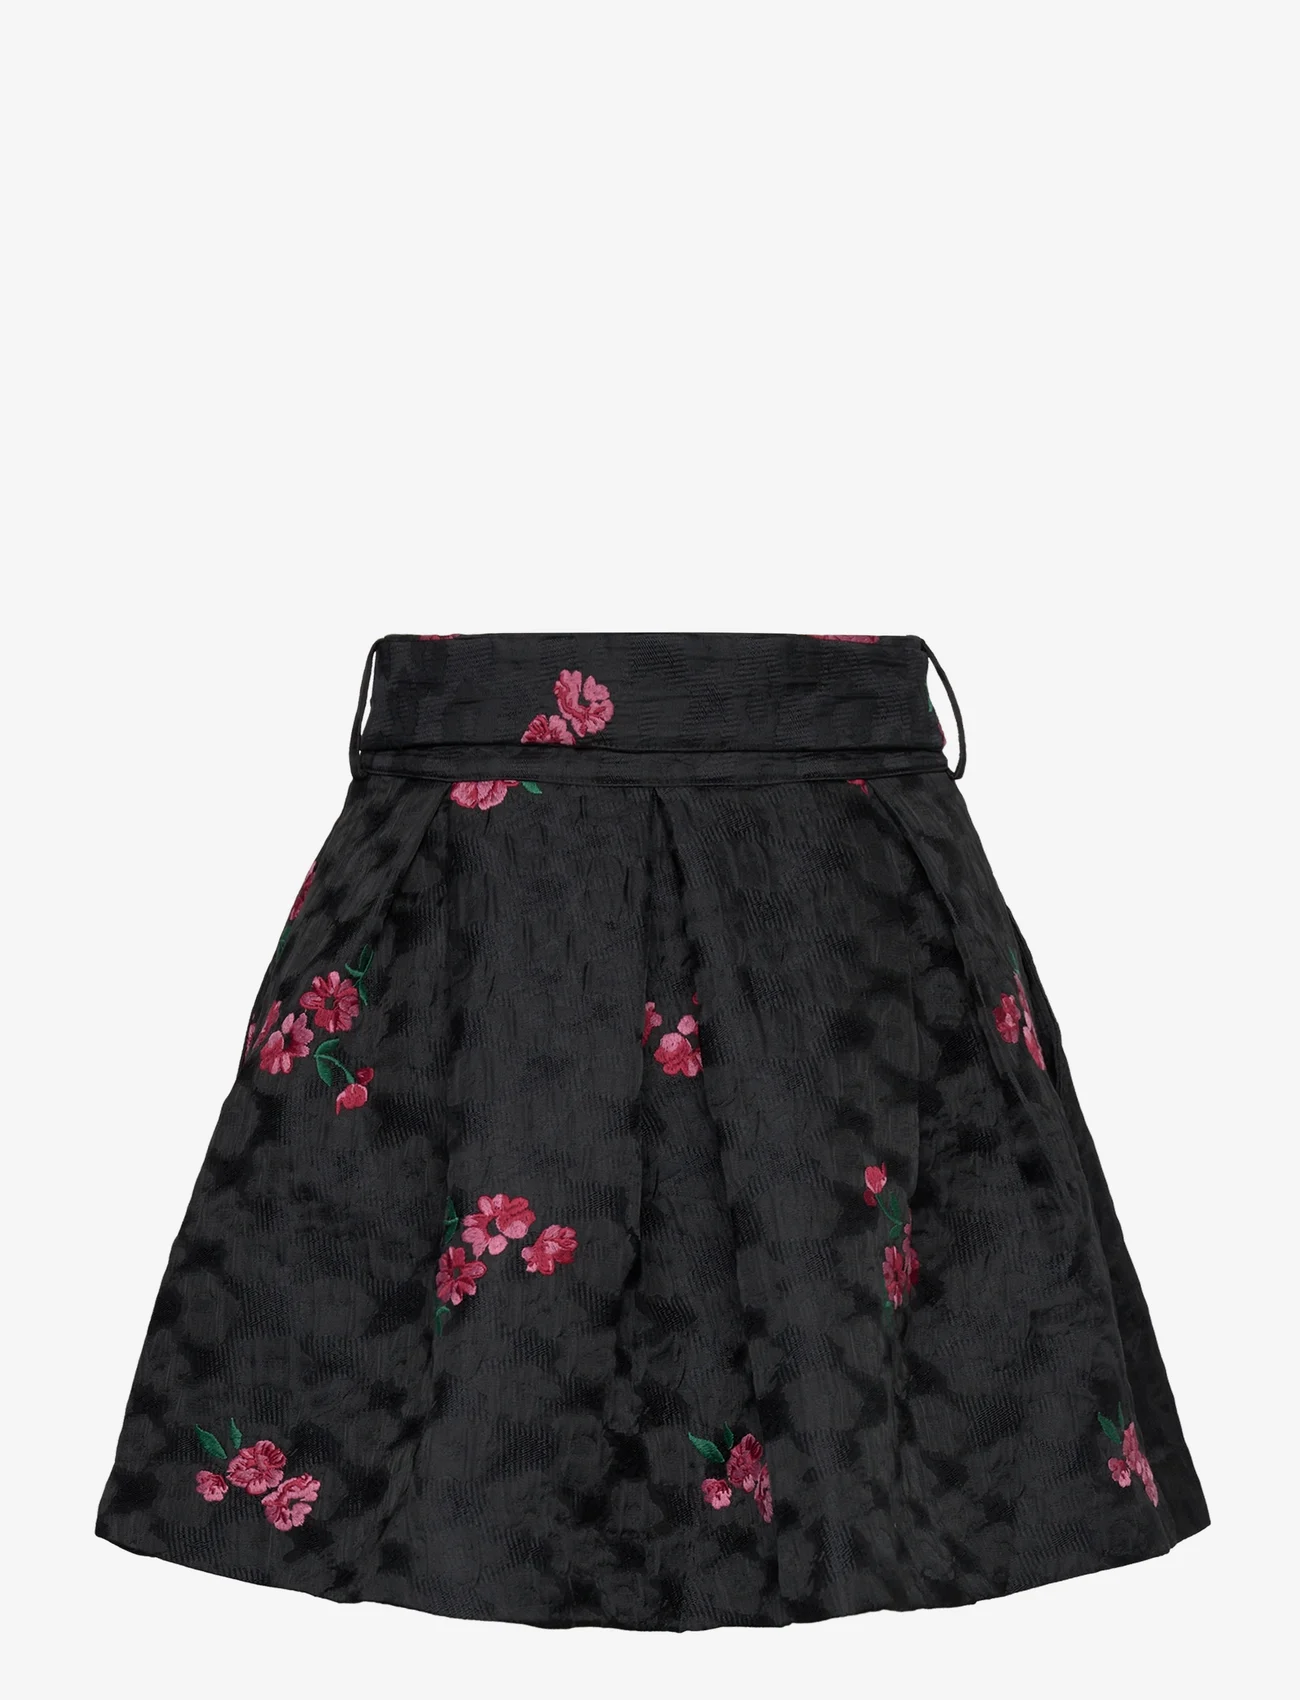 Custommade - Rosabel - short skirts - 999 anthracite black - 1